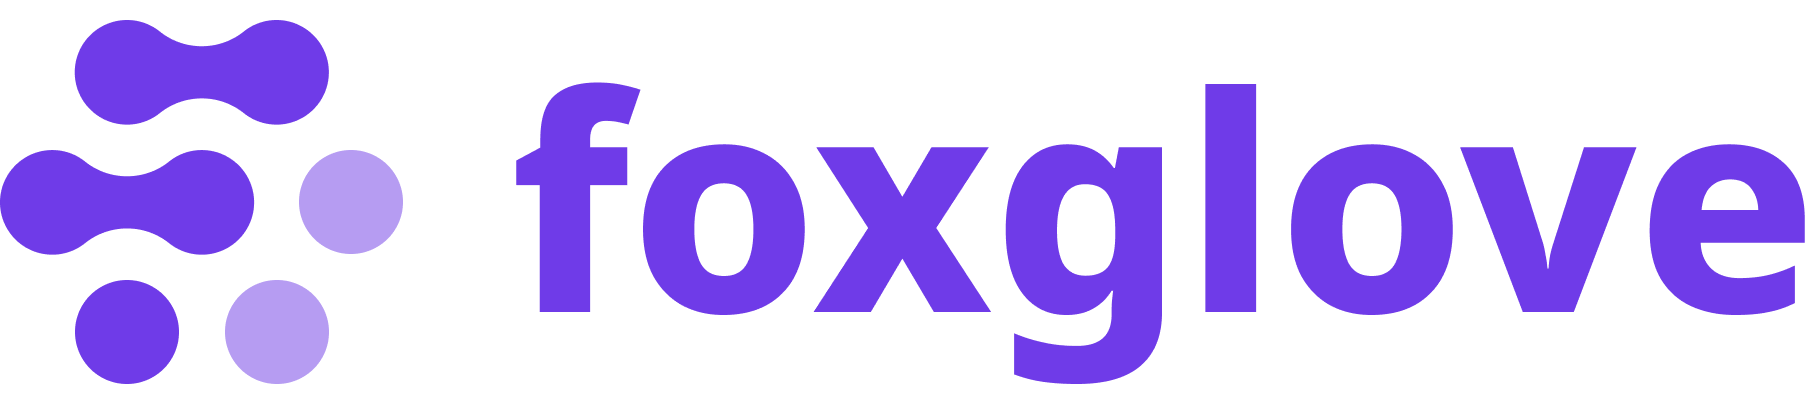 Foxglove logo